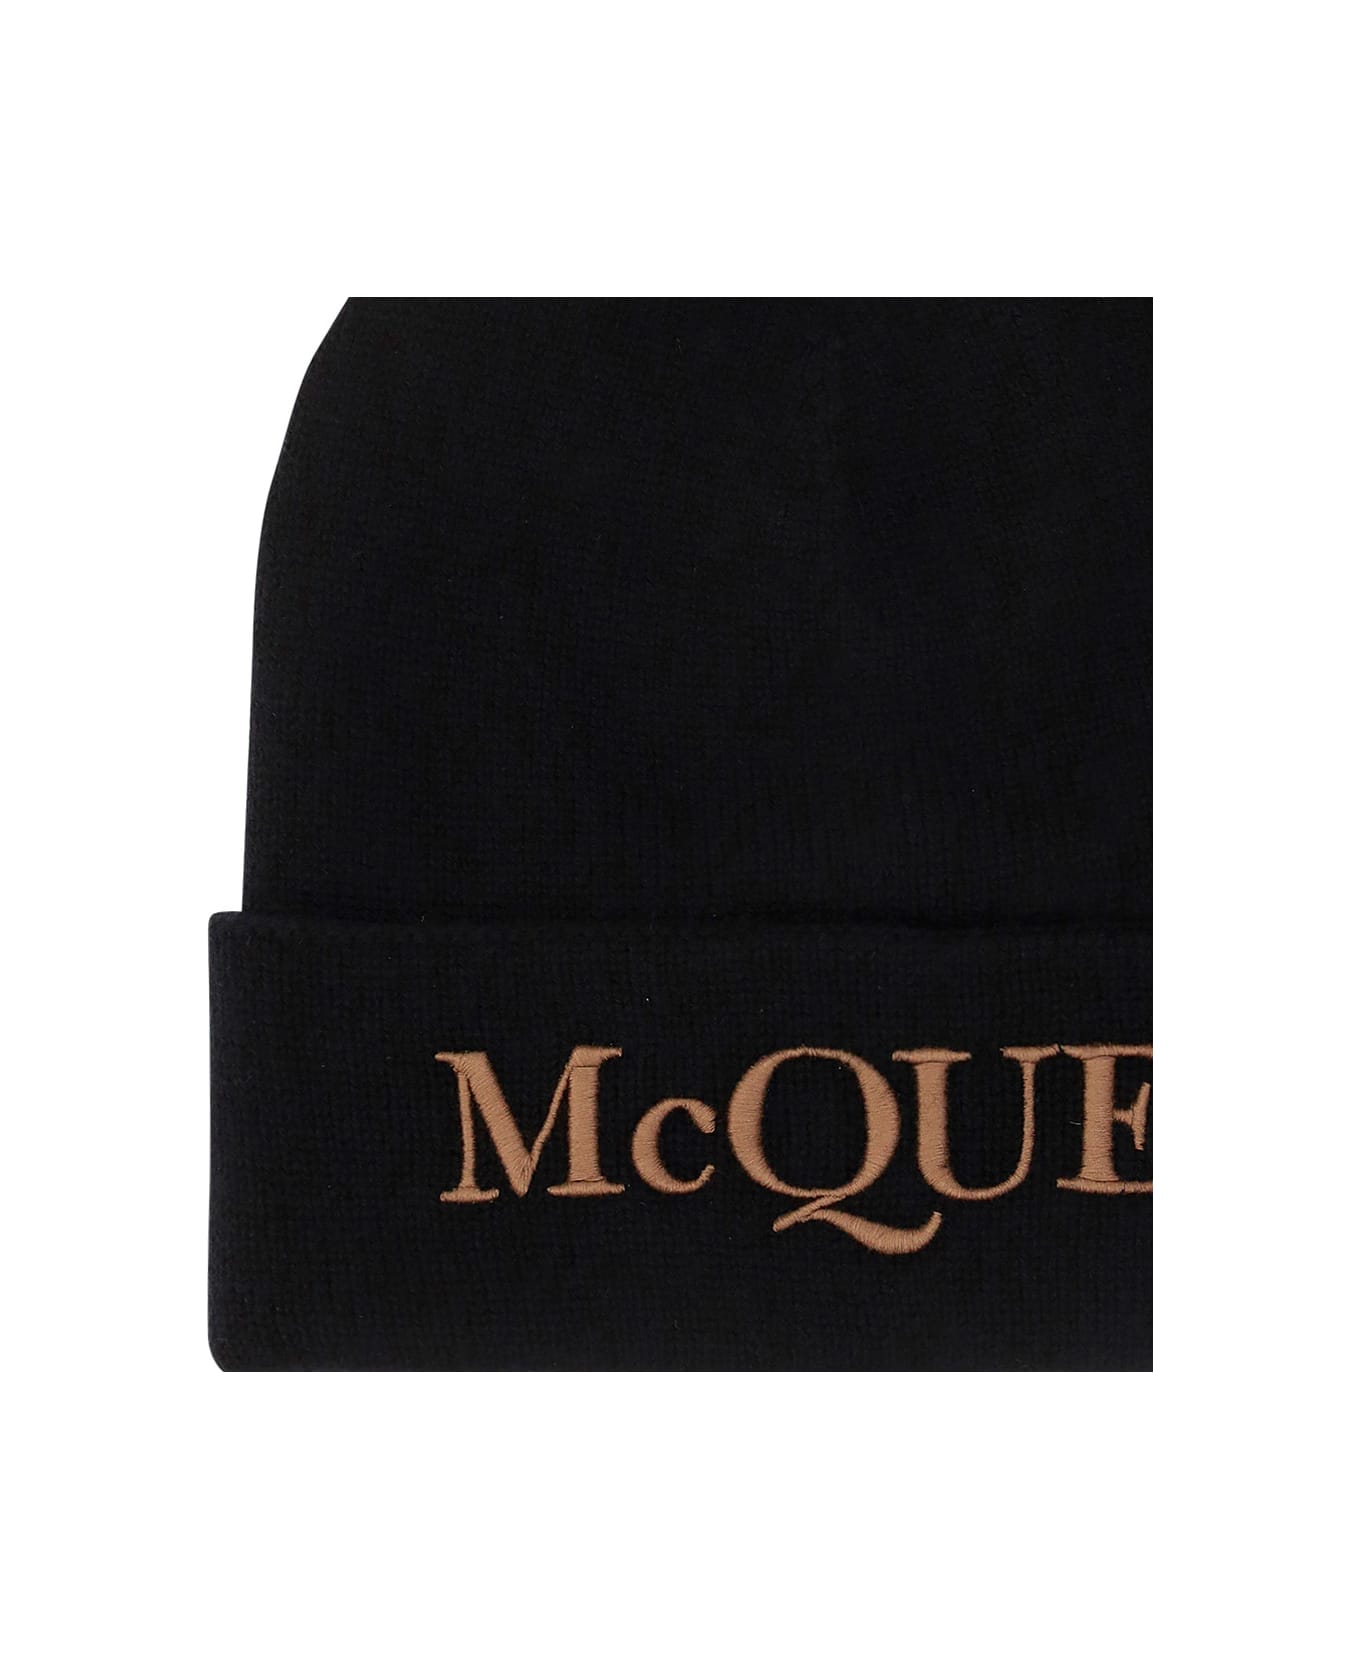 Alexander McQueen Mcq Hat - BLACK 帽子